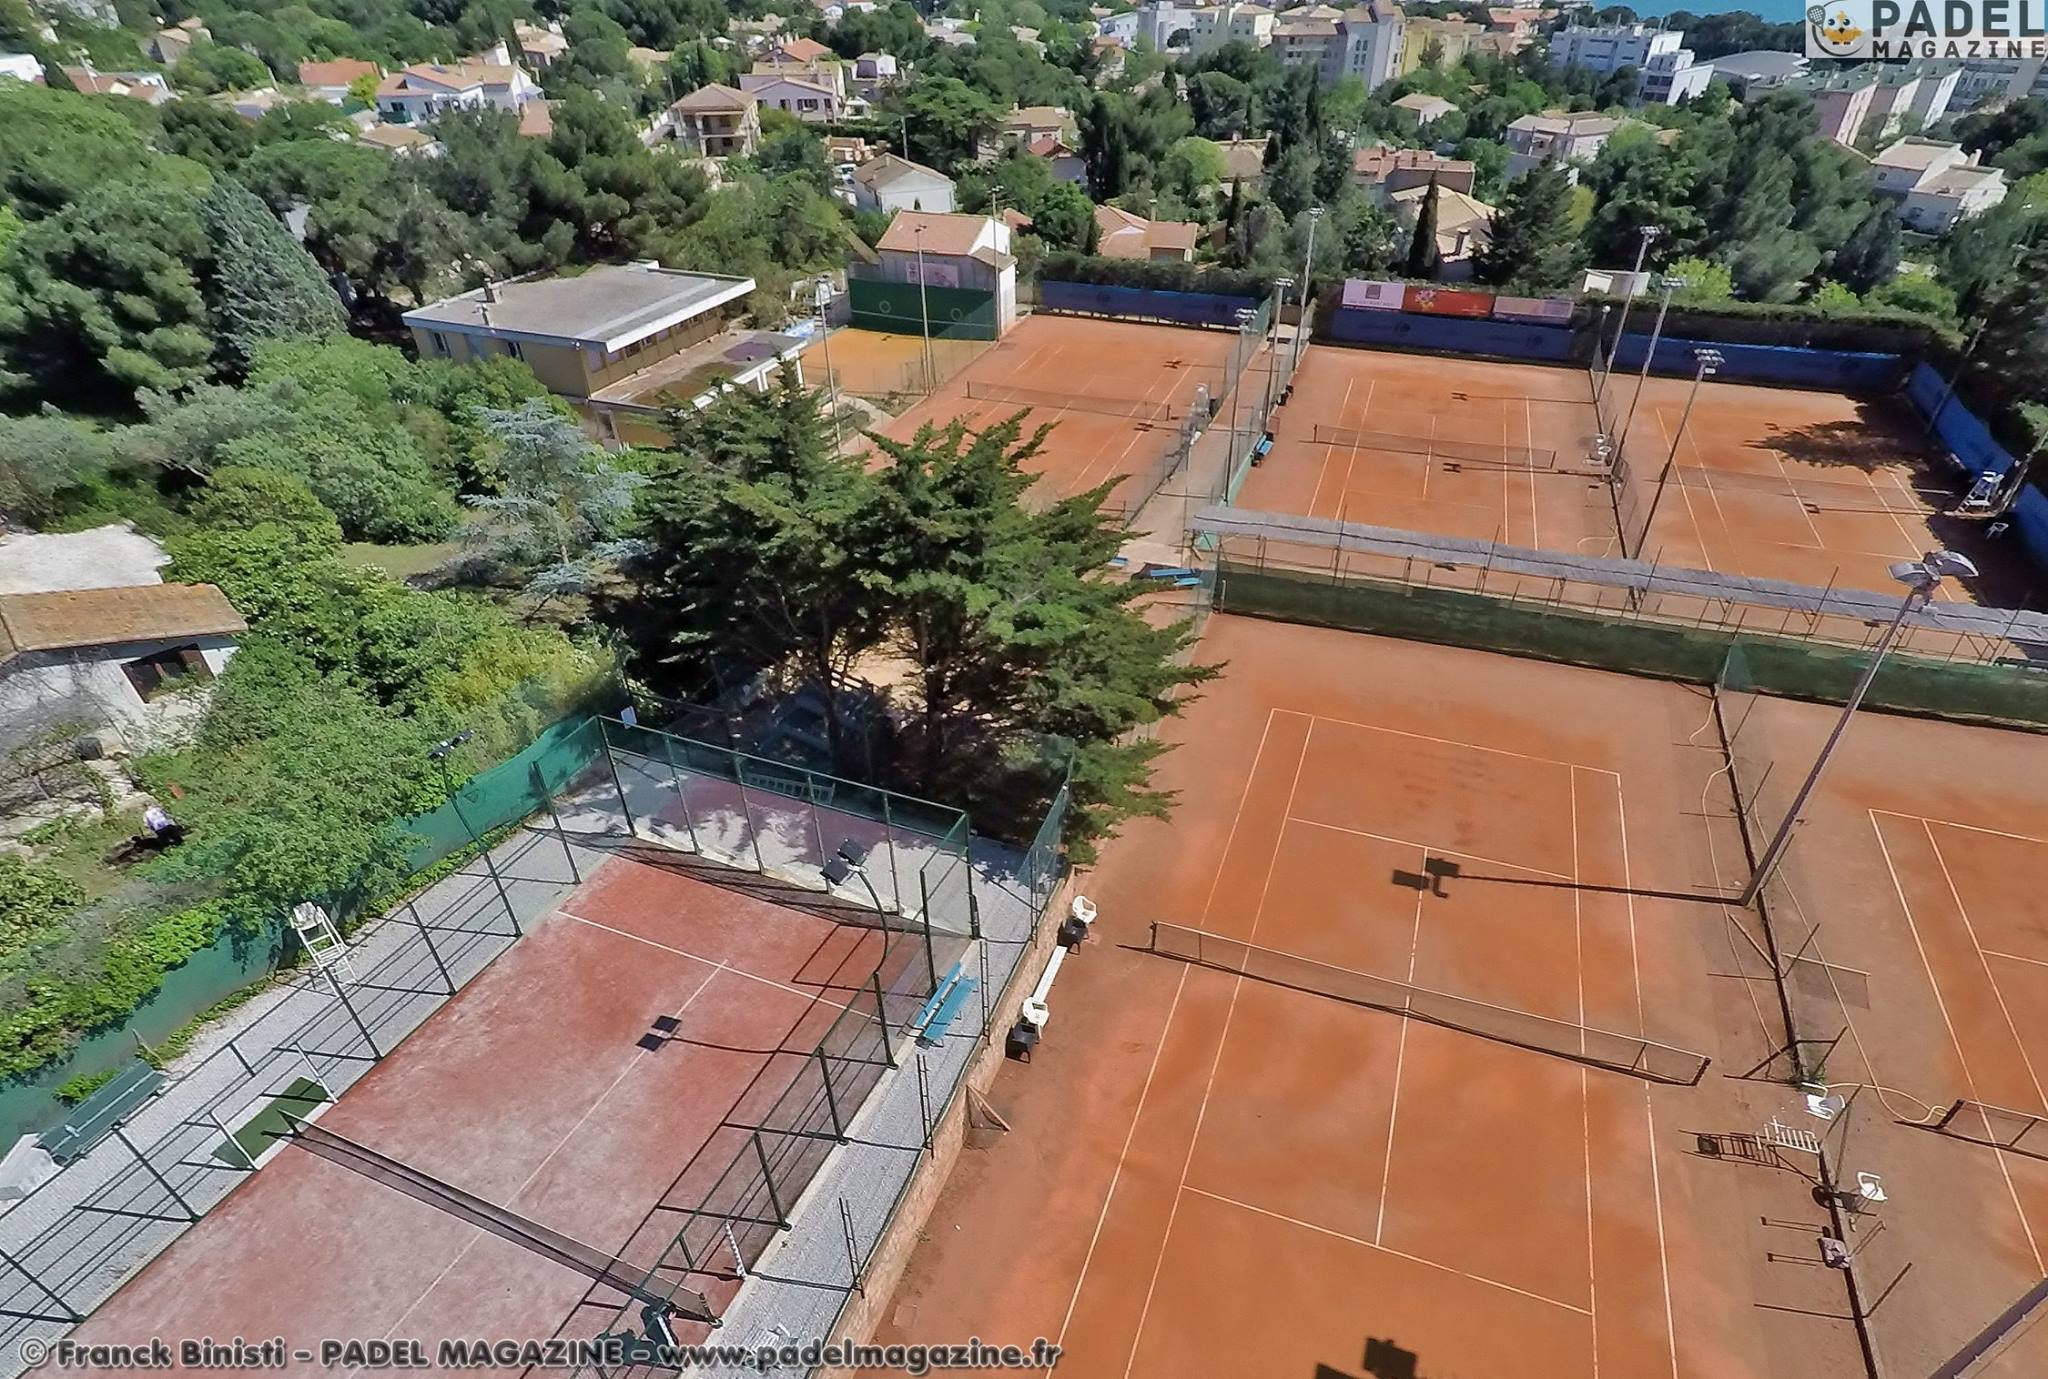 Sète Tennis Club har ambitioner om at gøre mere